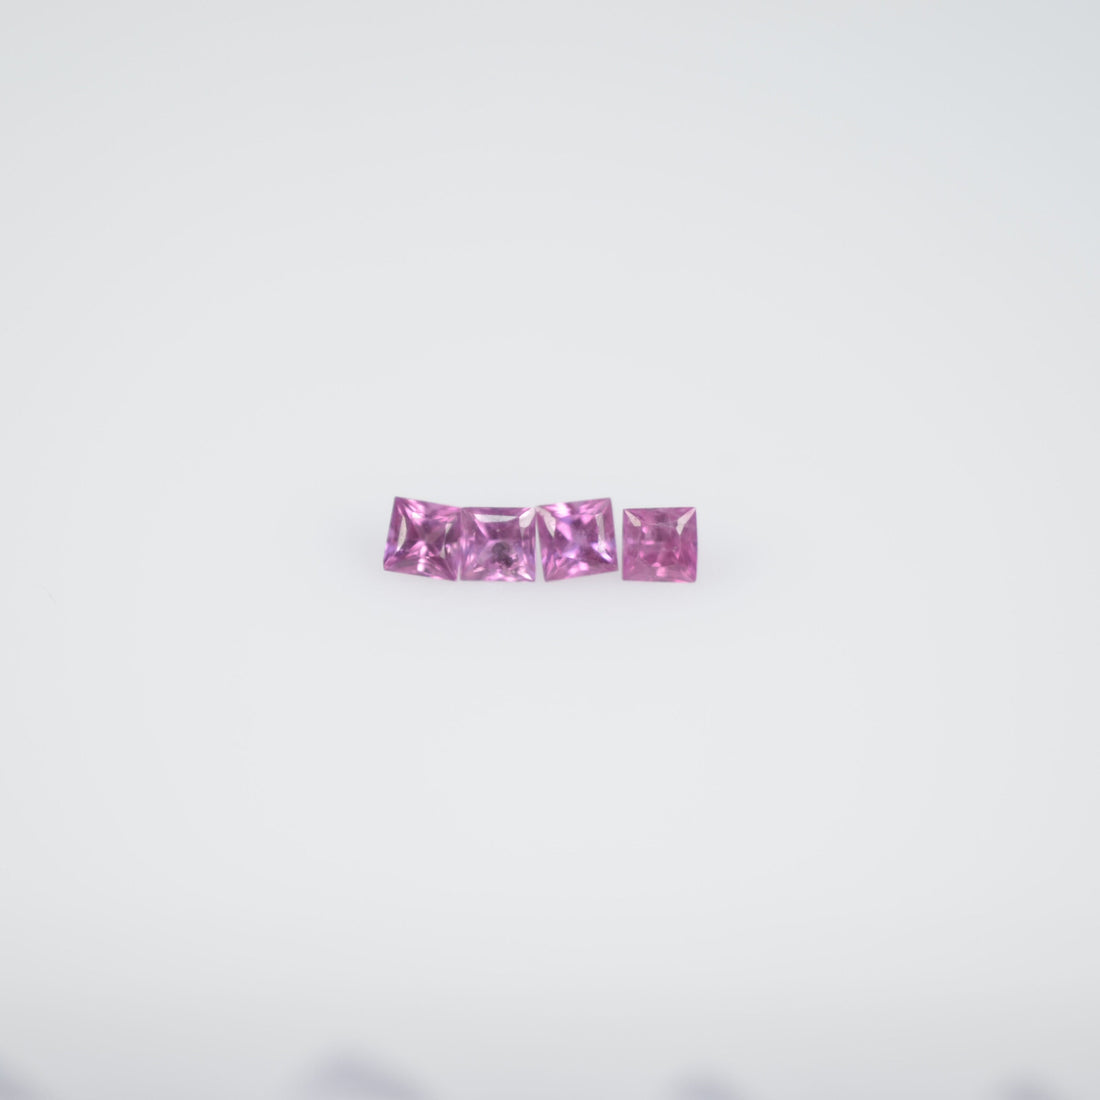 1.0-2.1 mm Natural Callibrated Pink Sapphire Loose Gemstone Princess Square Cut